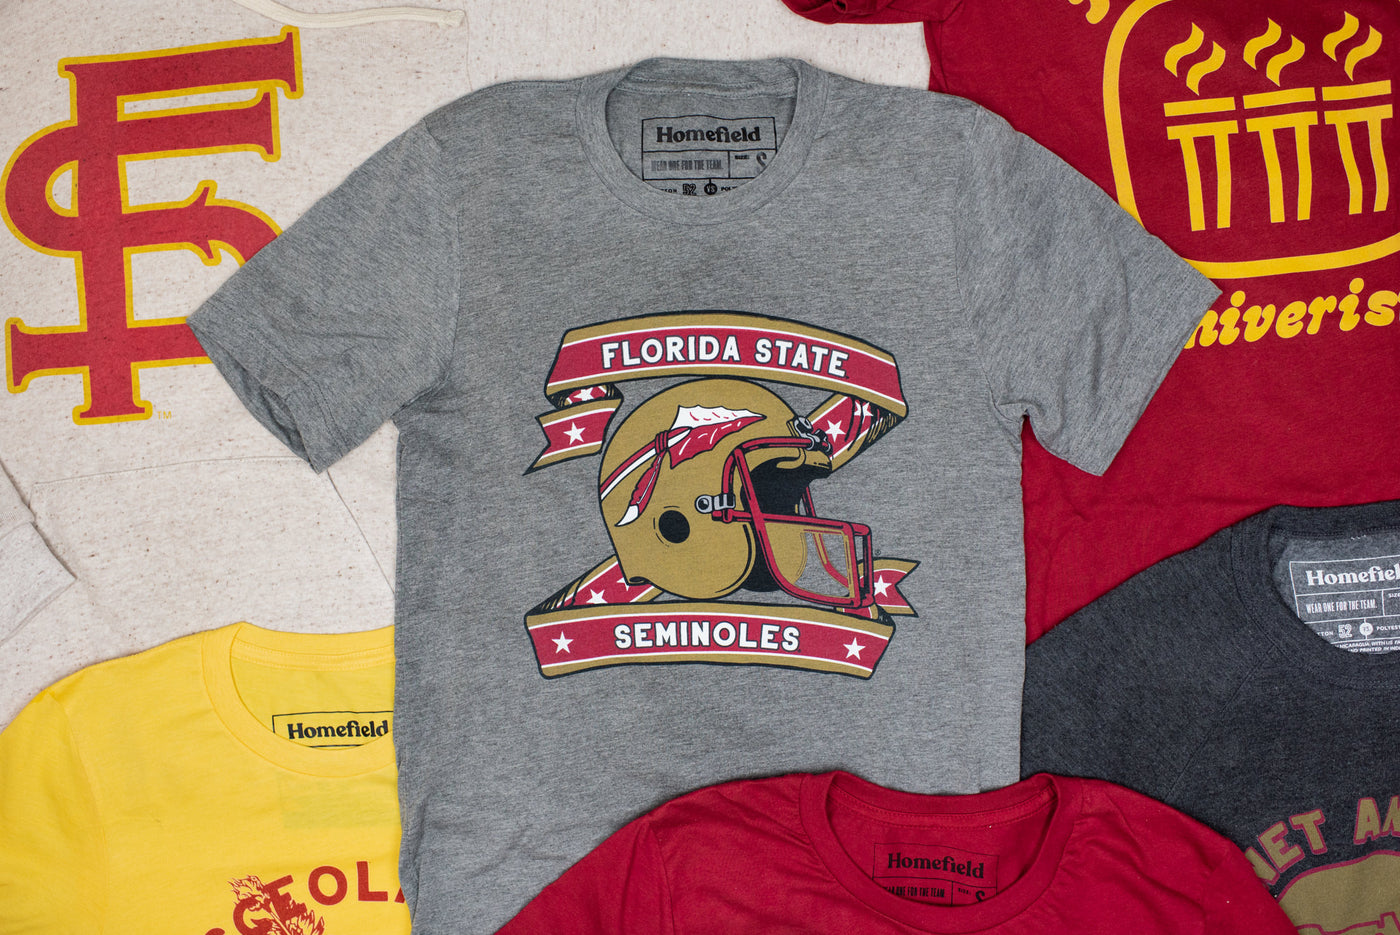 Vintage Florida State Seminoles Apparel: Shirts, Sweatshirts